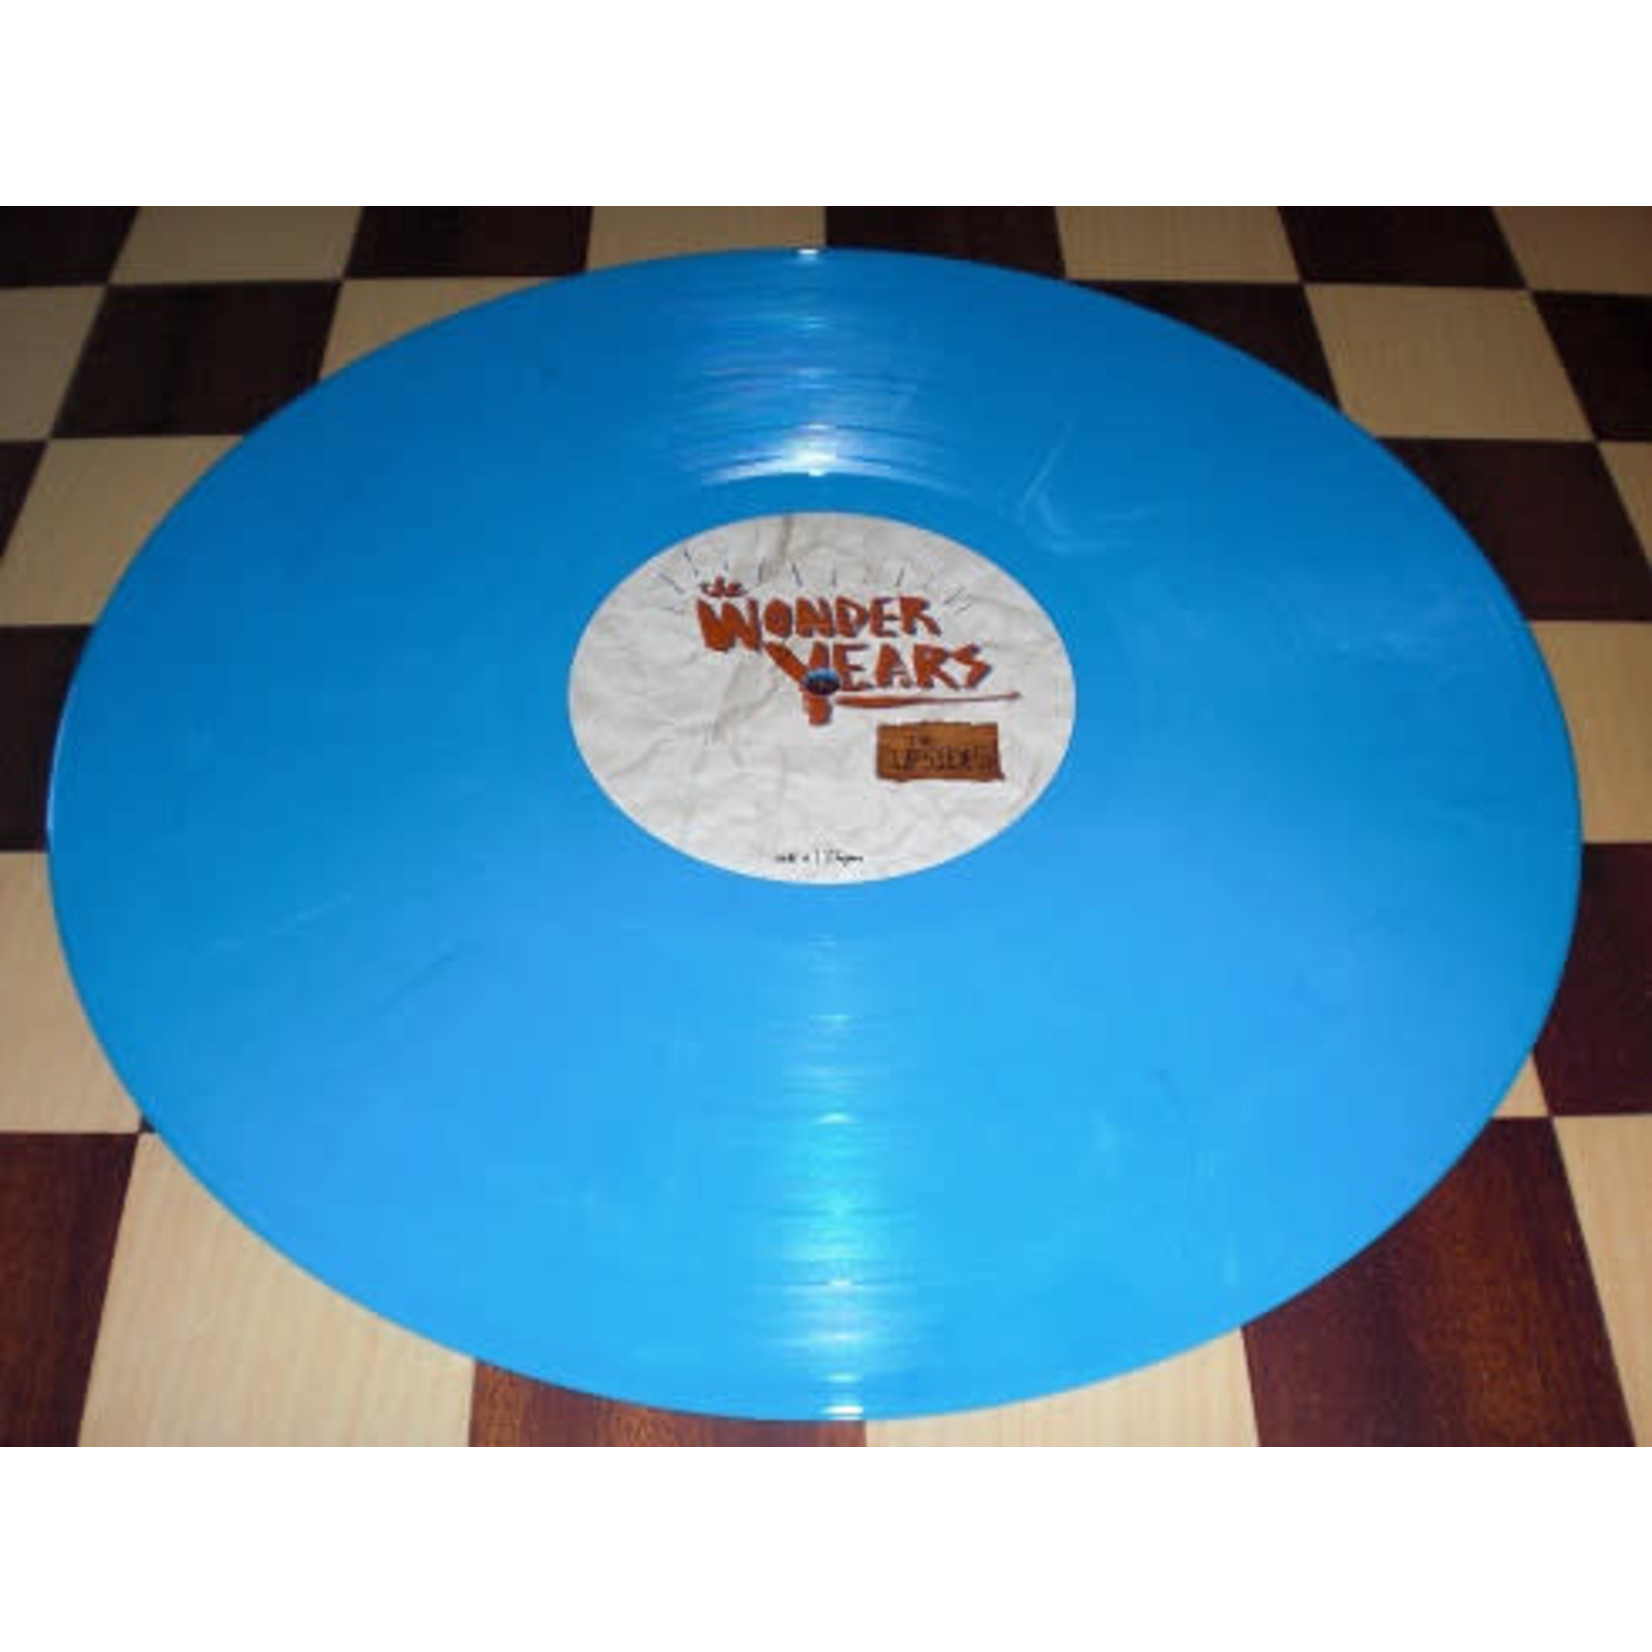 [New] Wonder Years: Upsides (blue vinyl) [HOPELESS]